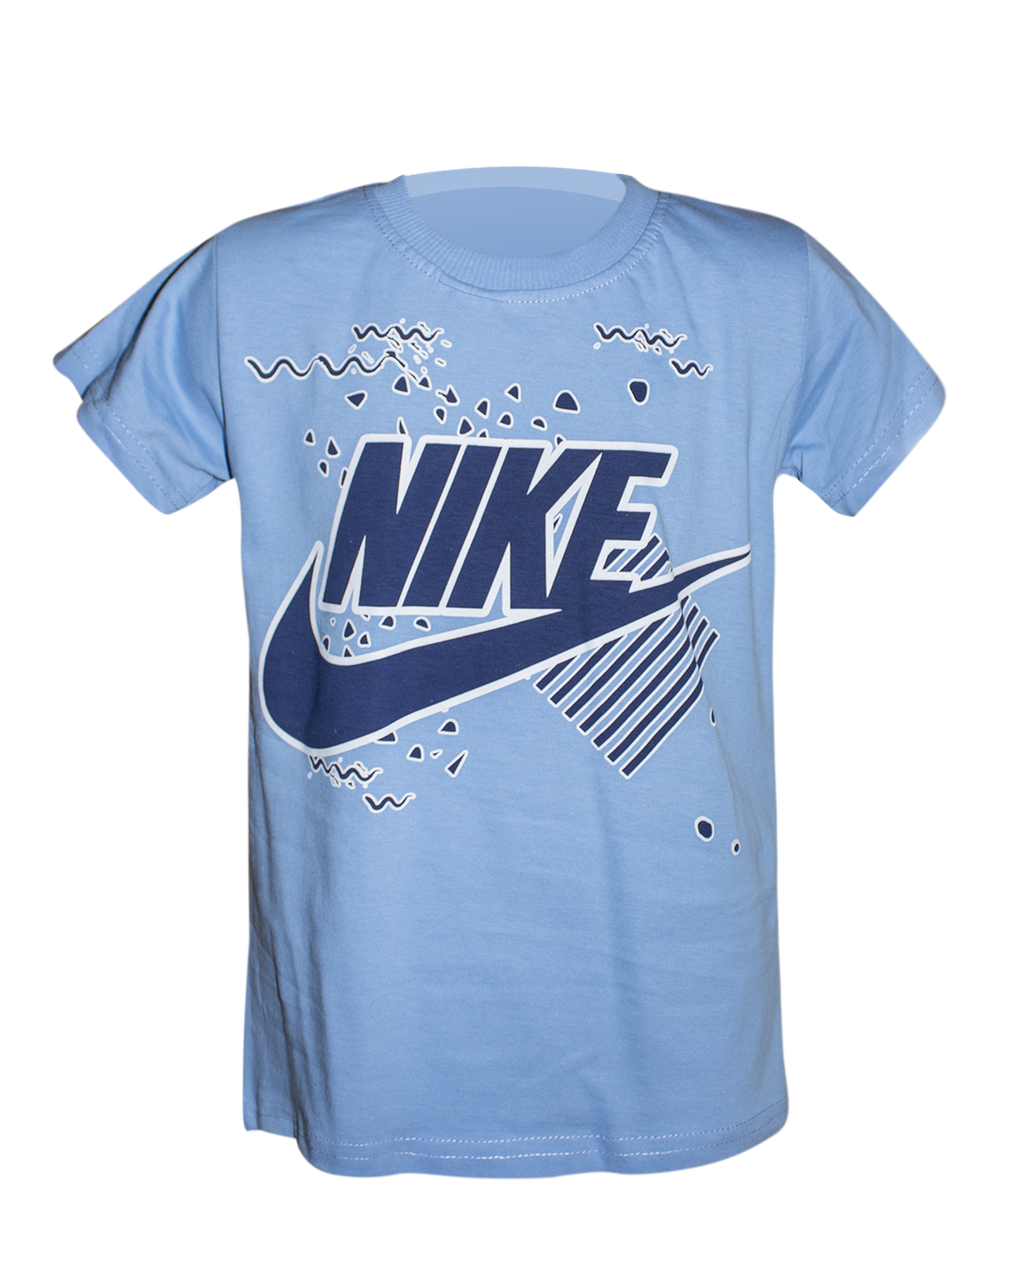 

Футболка для мальчика Nike (Найк) 9-12 лет голубой, 134